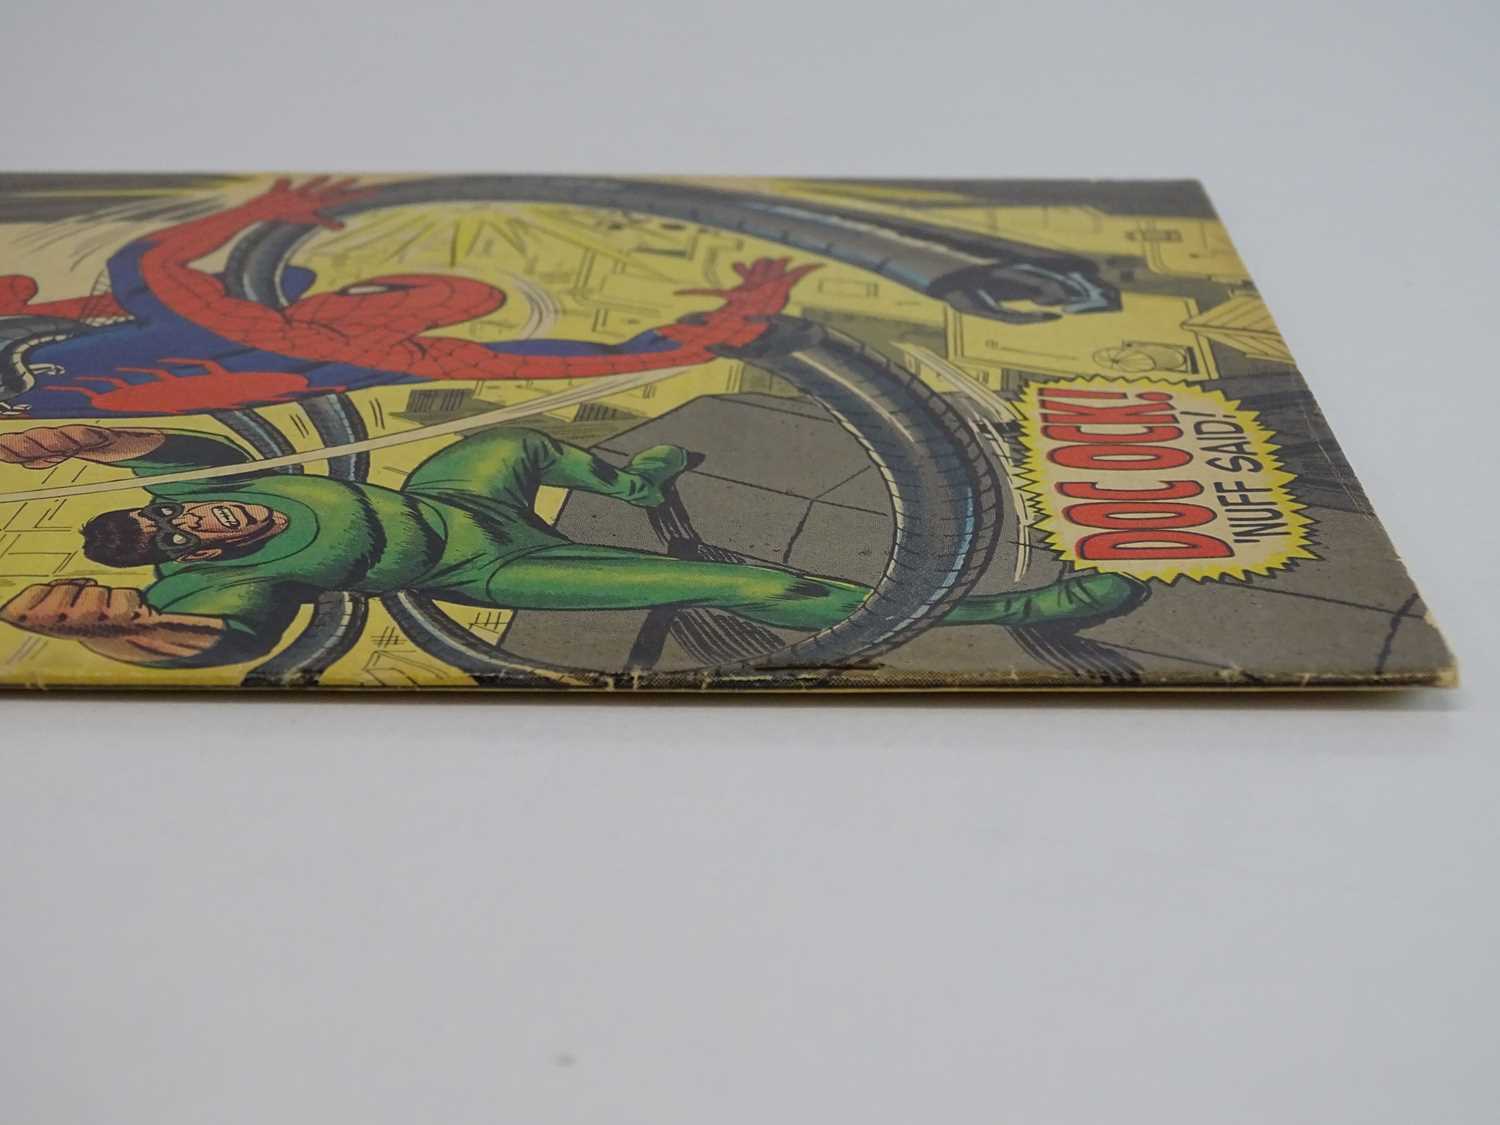 AMAZING SPIDER-MAN #53 - (1967 - MARVEL) - Spider-Man battles Doctor Octopus + Peter Parker and Gwen - Image 9 of 9